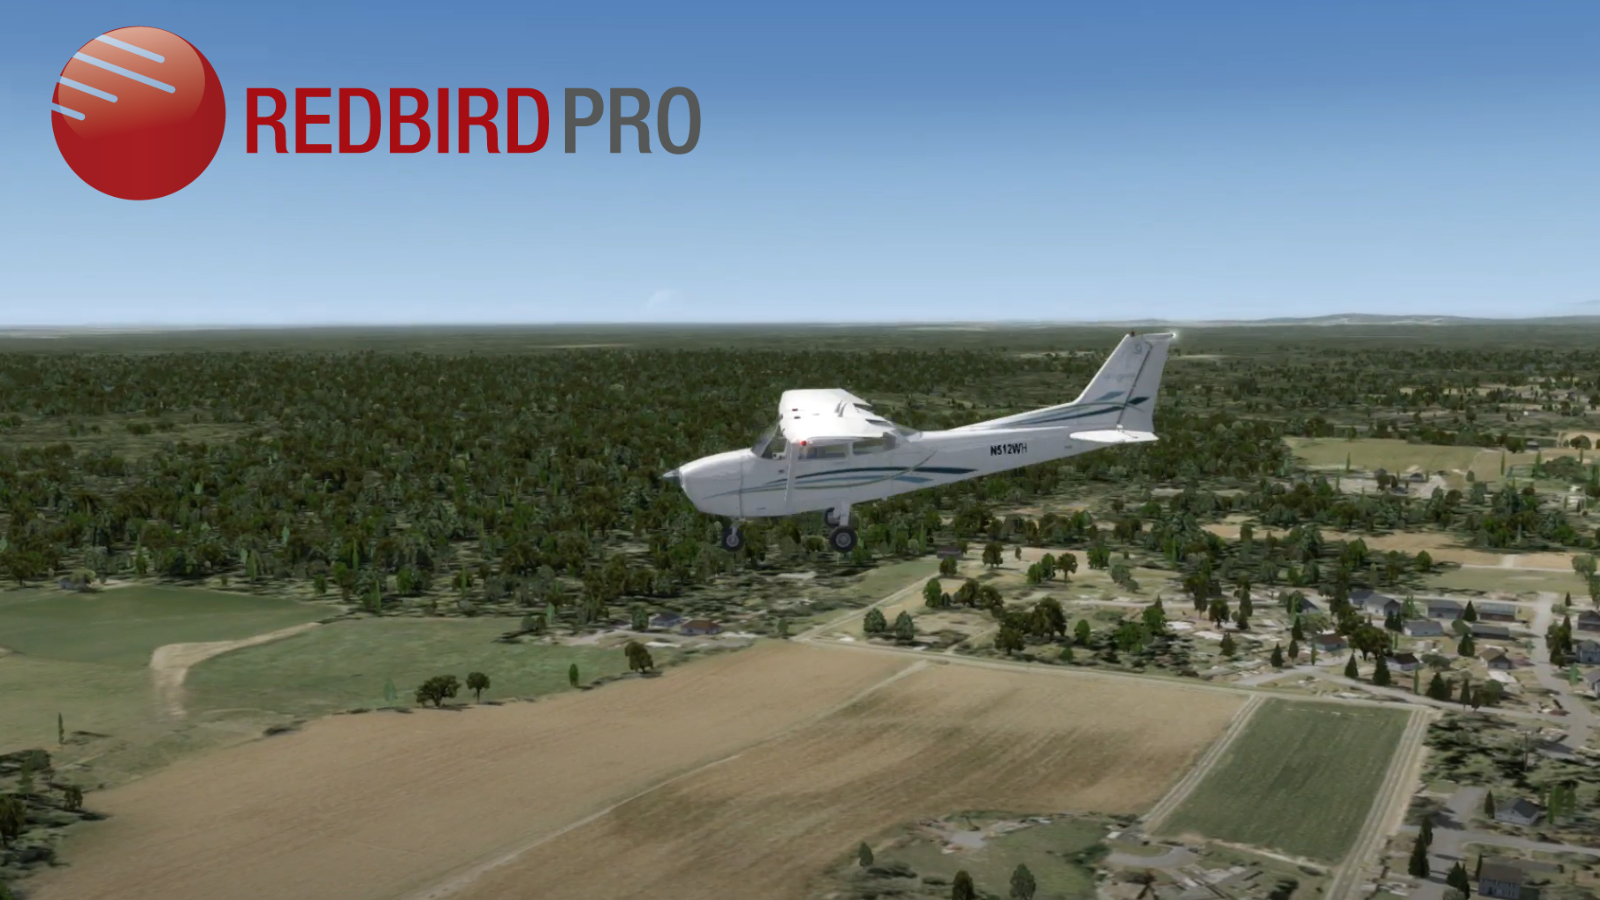 Featured Redbird Pro scenarios for September 2022